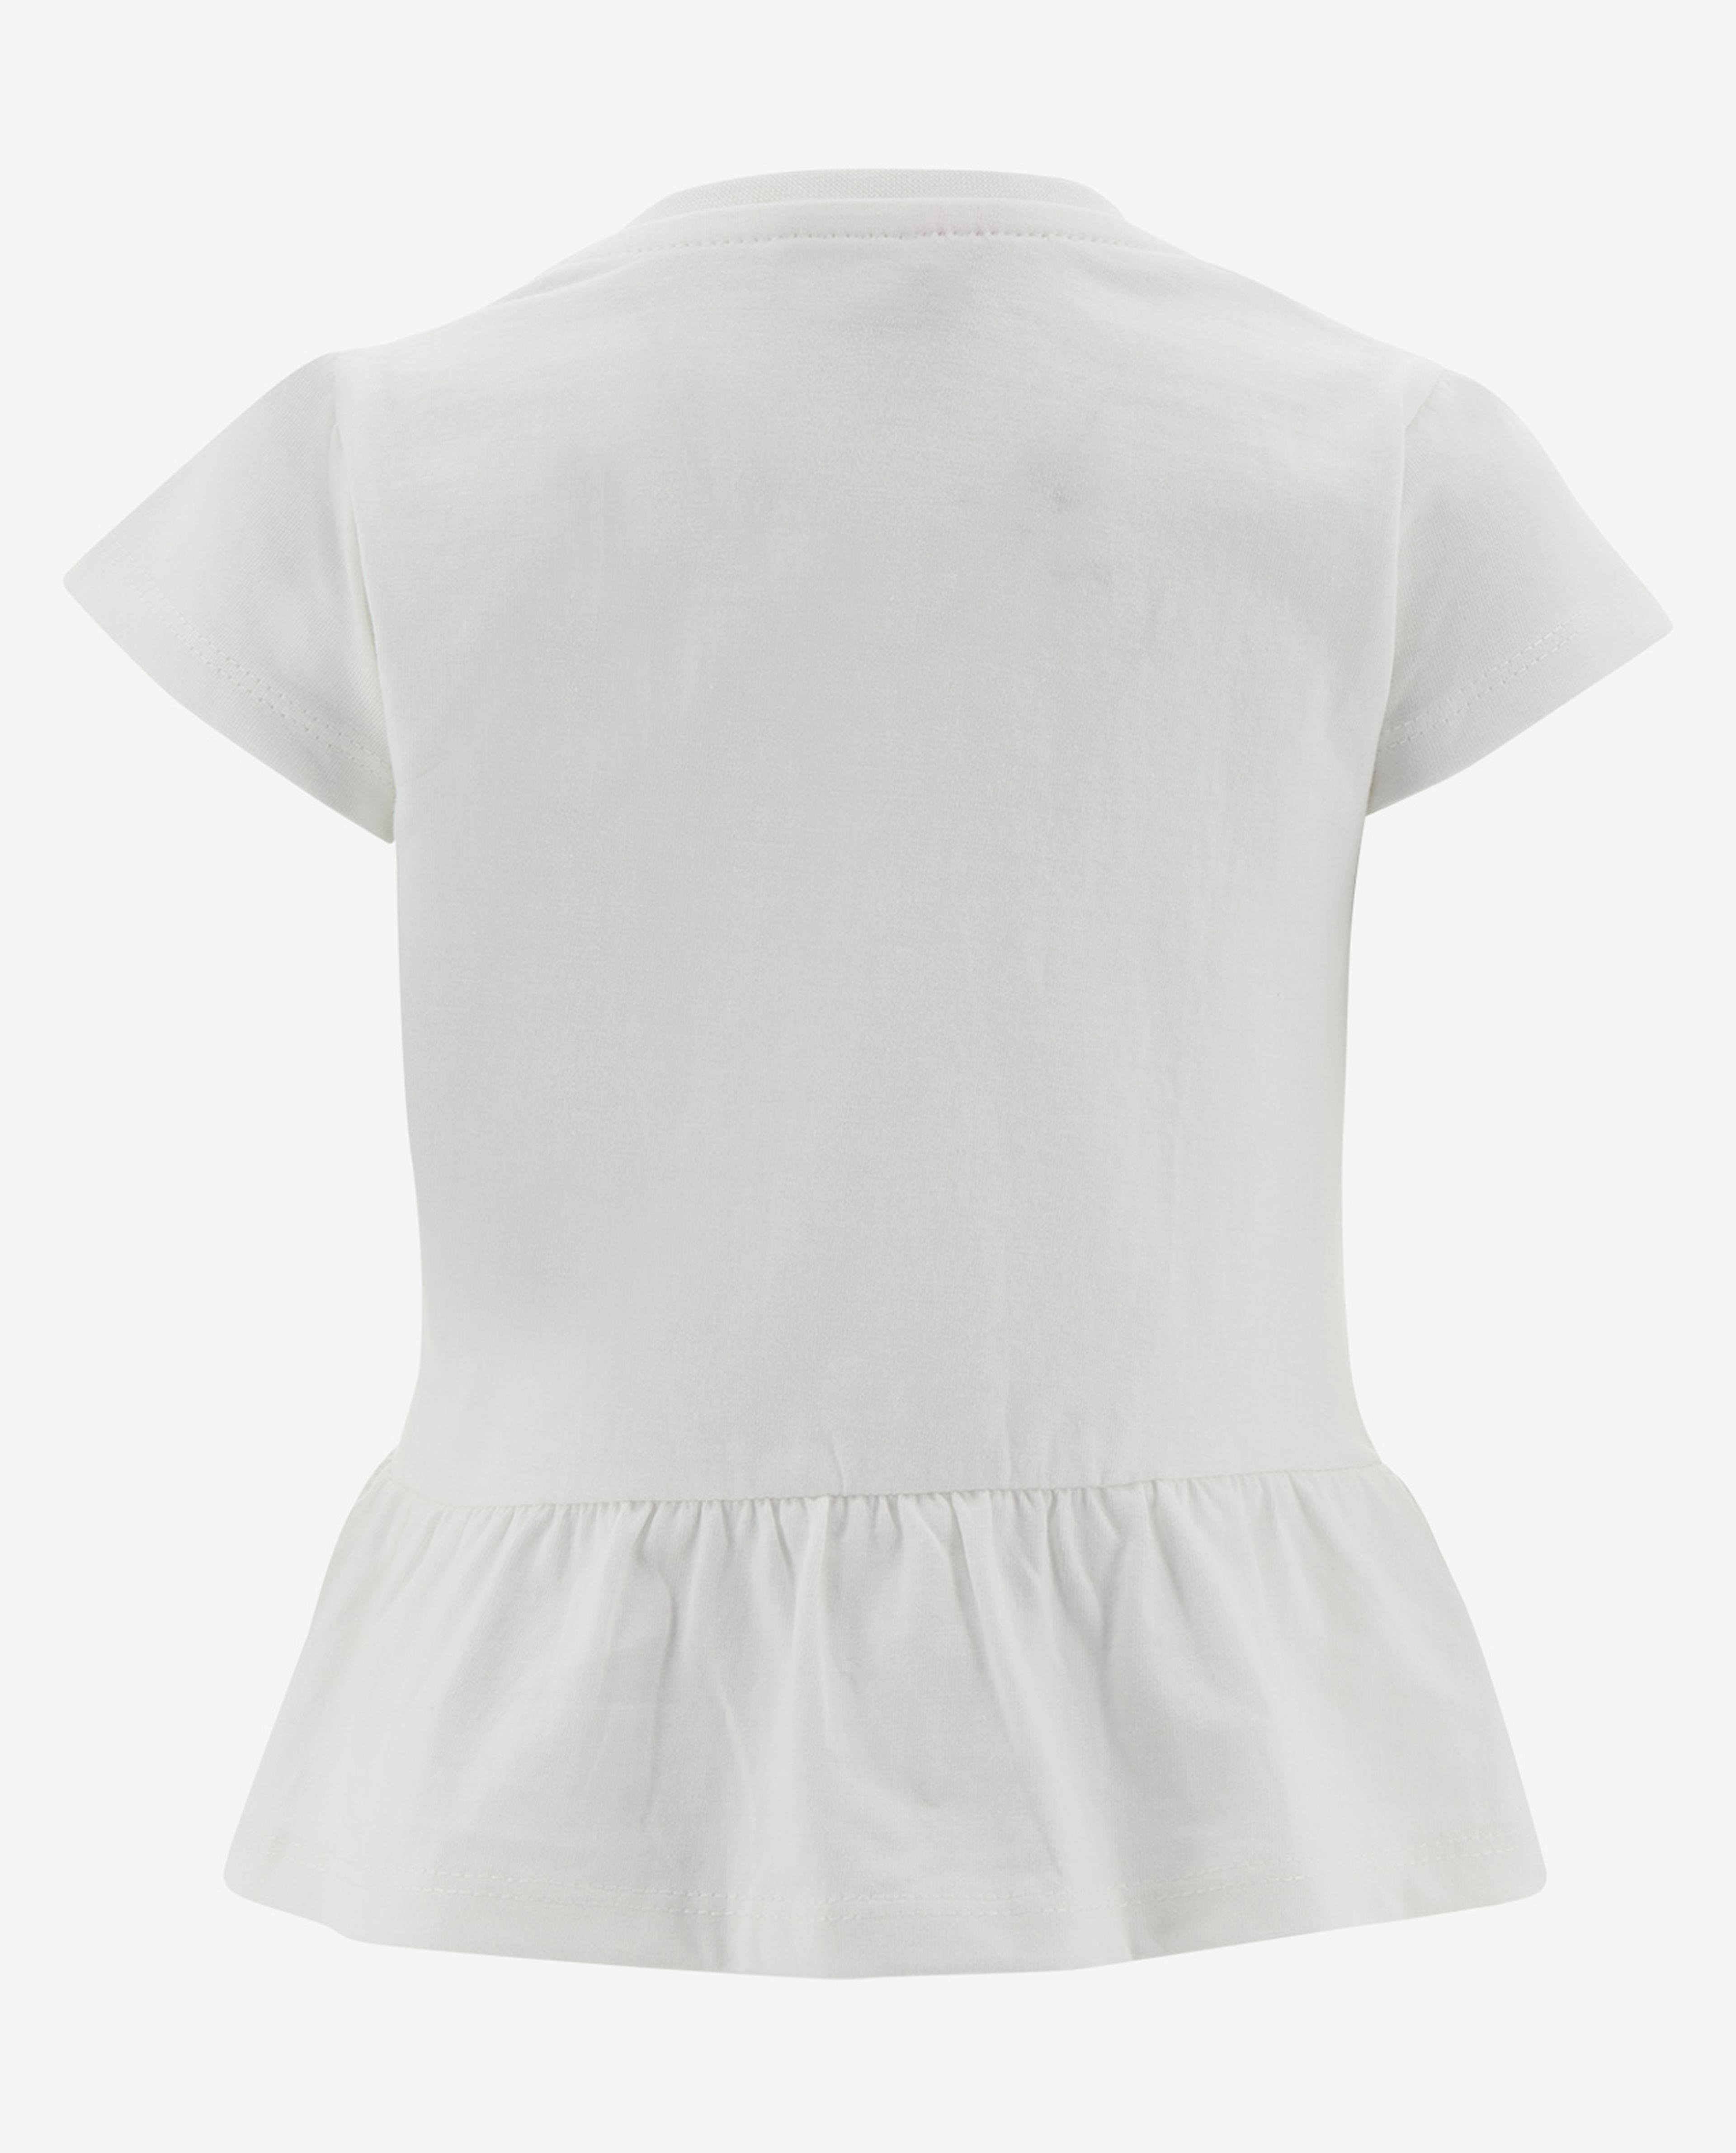 White Infant Girls Knit Fashion Top